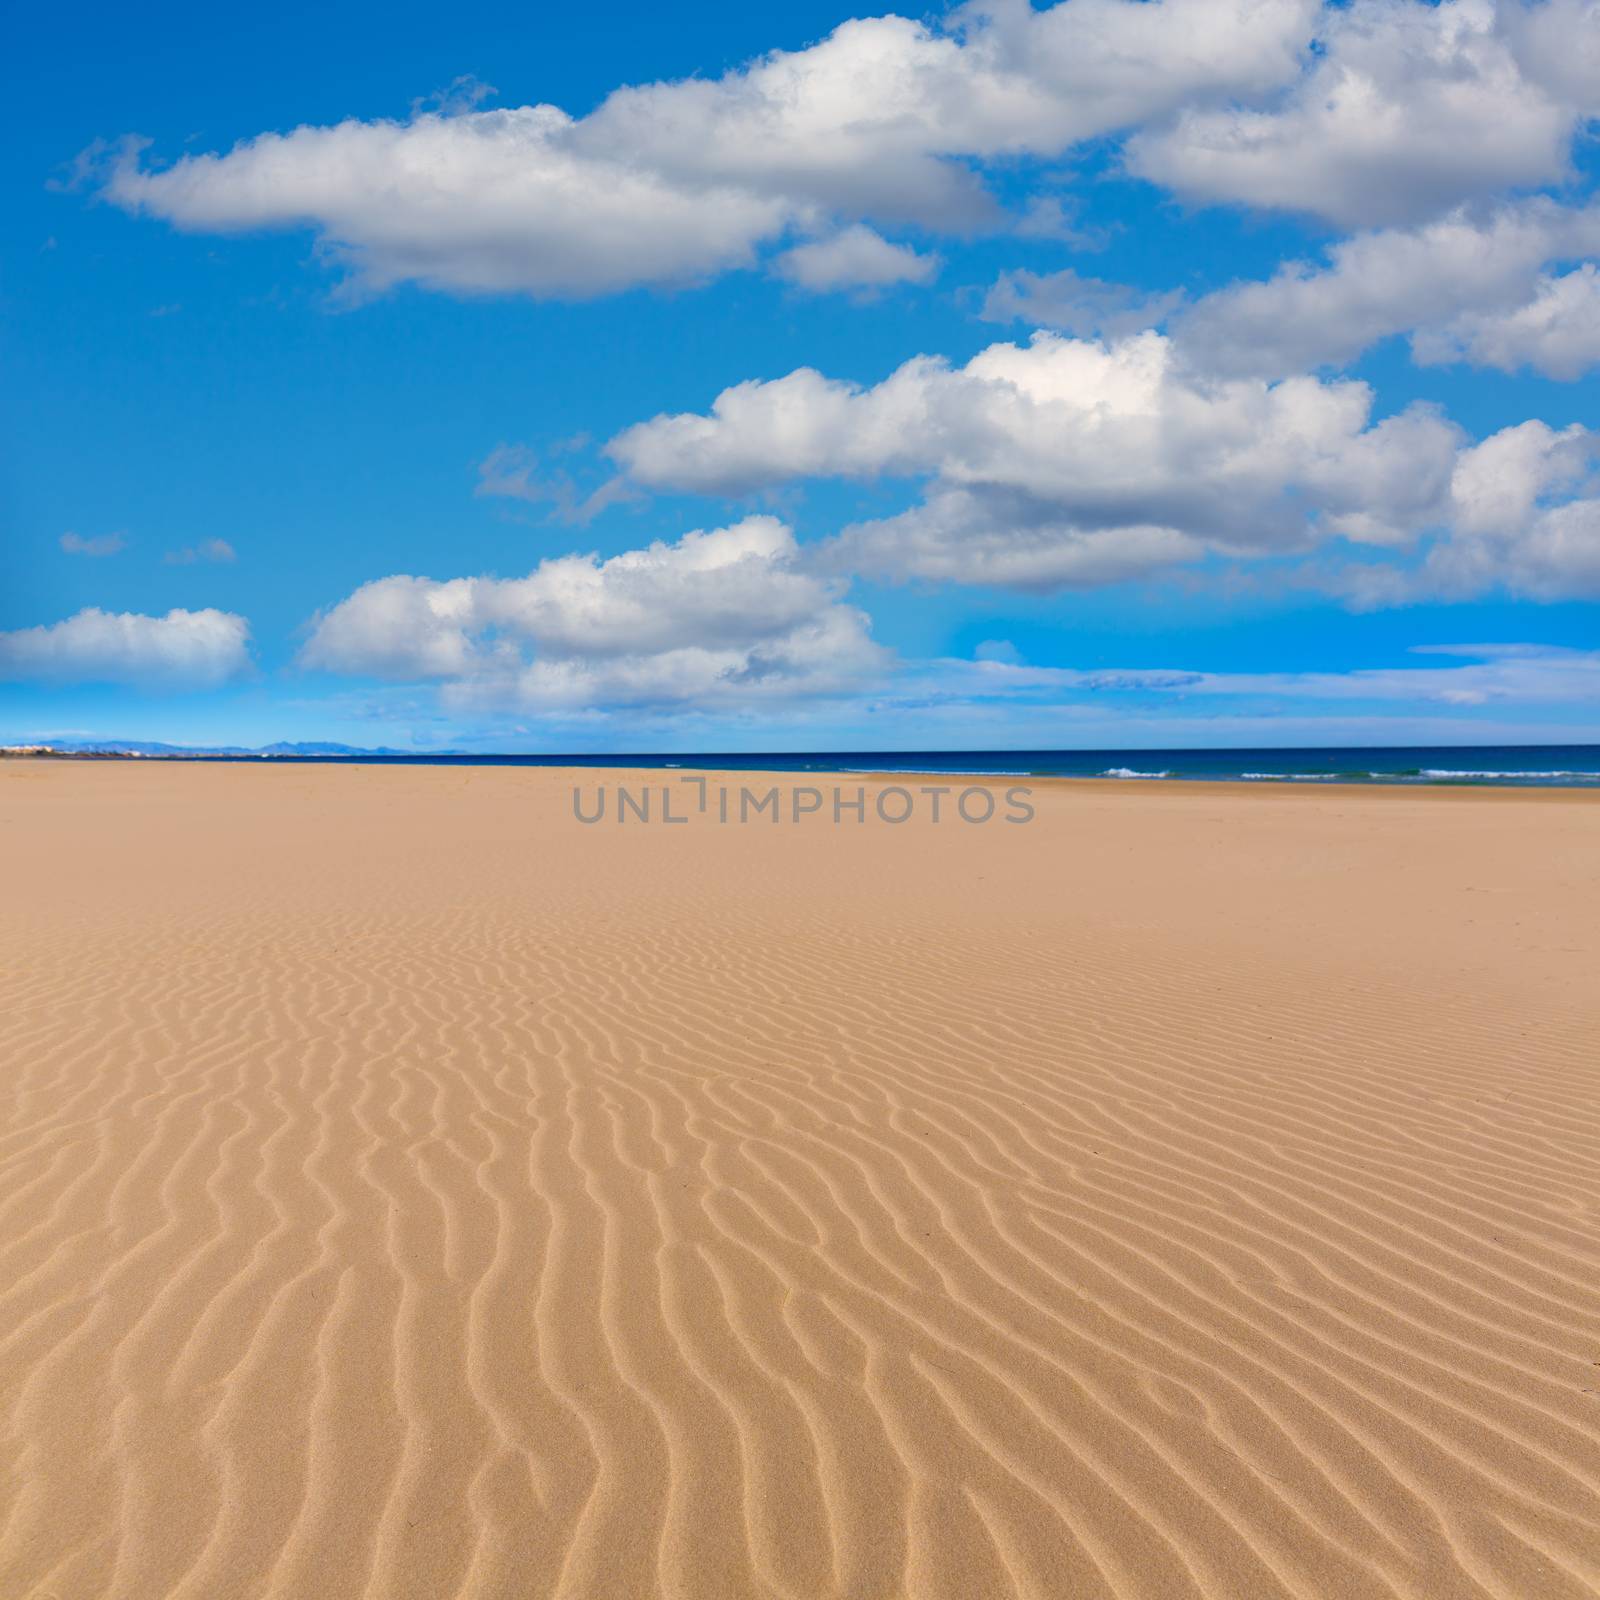 Canet de Berenguer beach in Valencia in a sunny day at mediterranean Spain